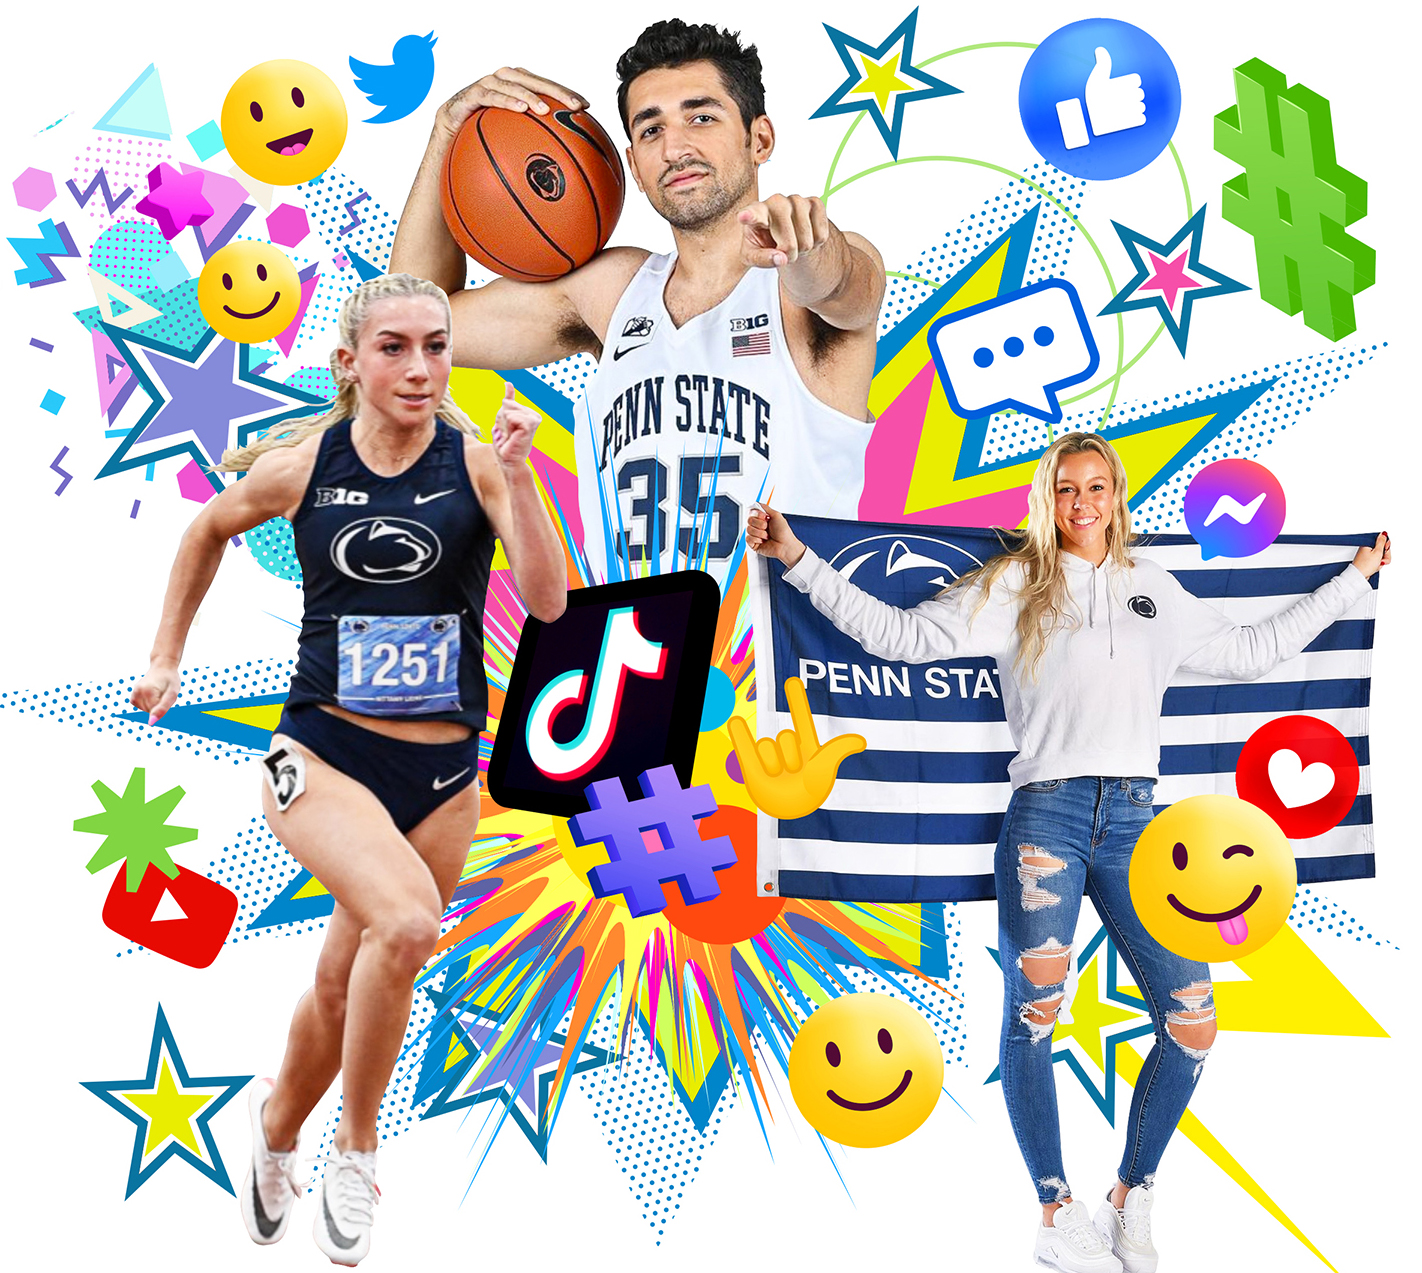 Penn State athletes and social media creators